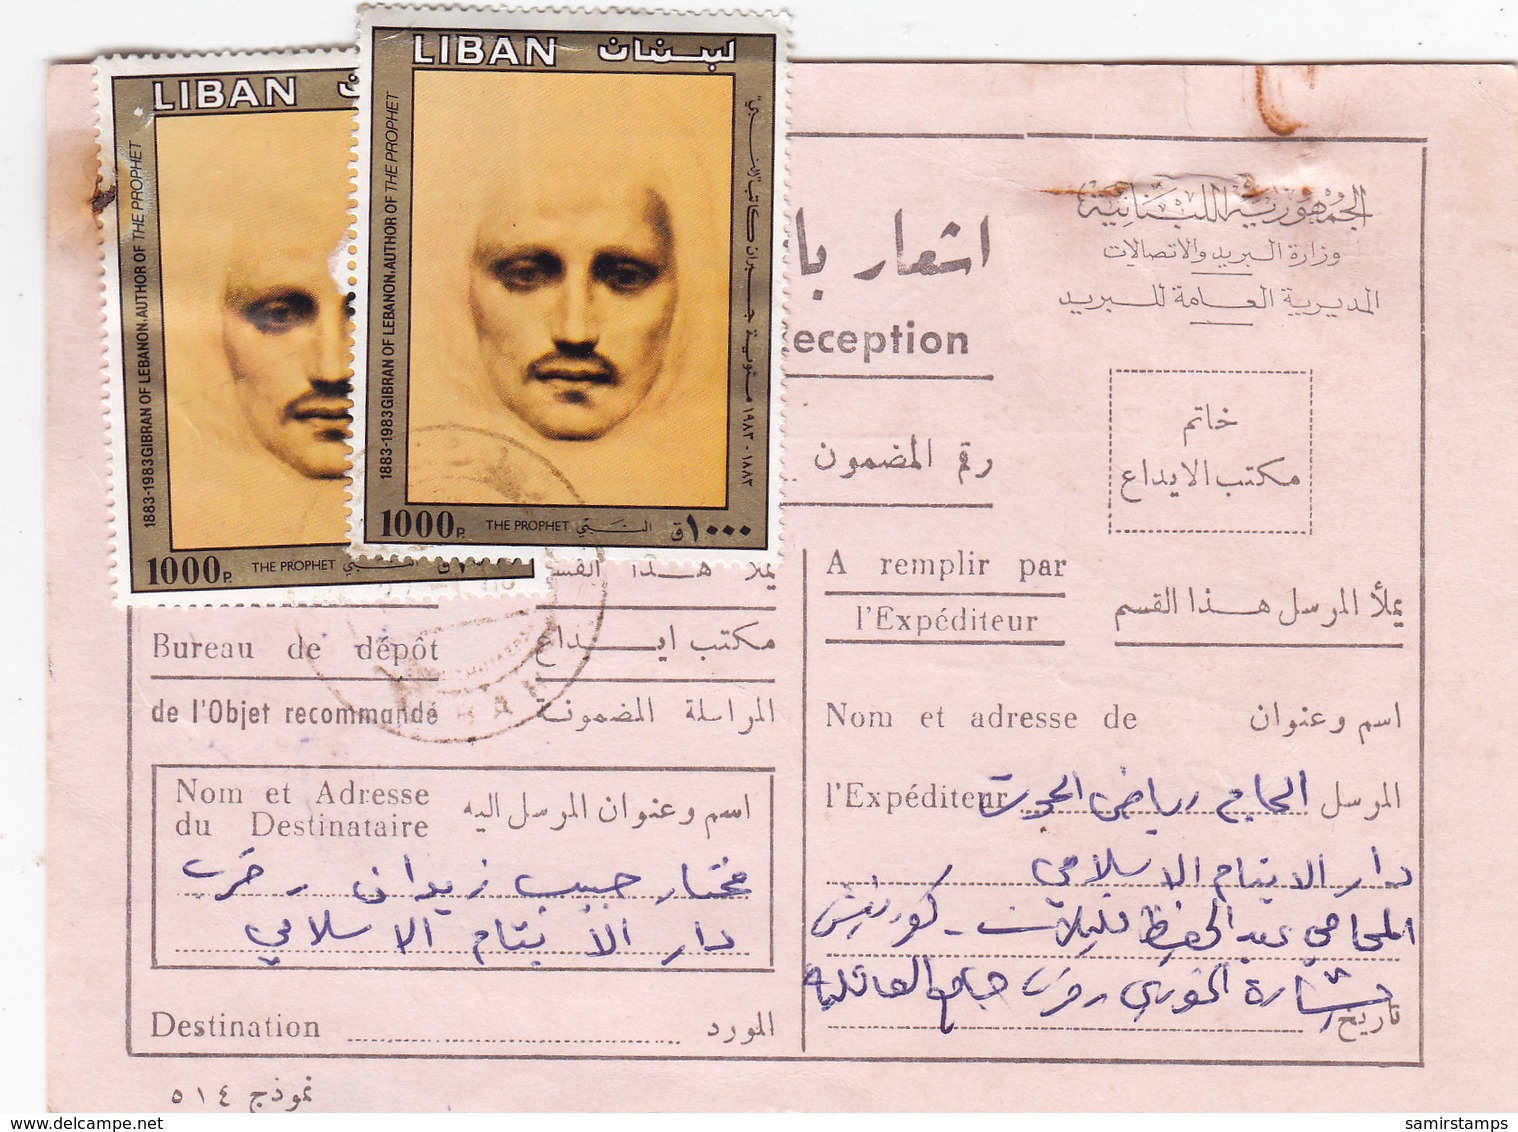 Lebanon-Liban Registr. Receipt 1988frsnked 2 Stamps Gebran High Values - Red. Price - SKRILL PAYMENT ONLY - Lebanon